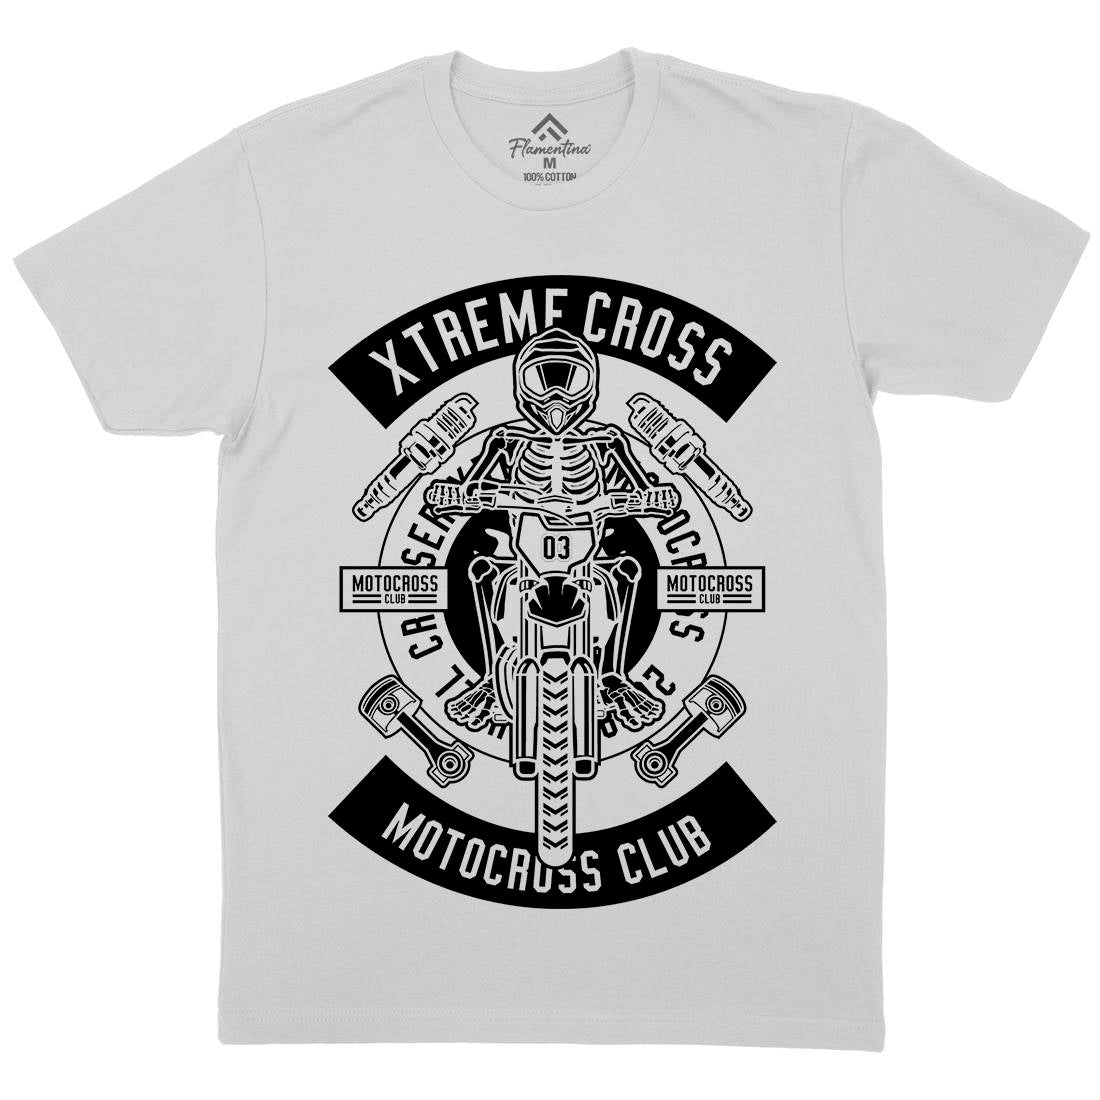 Xtreme Cross Mens Crew Neck T-Shirt Motorcycles B676